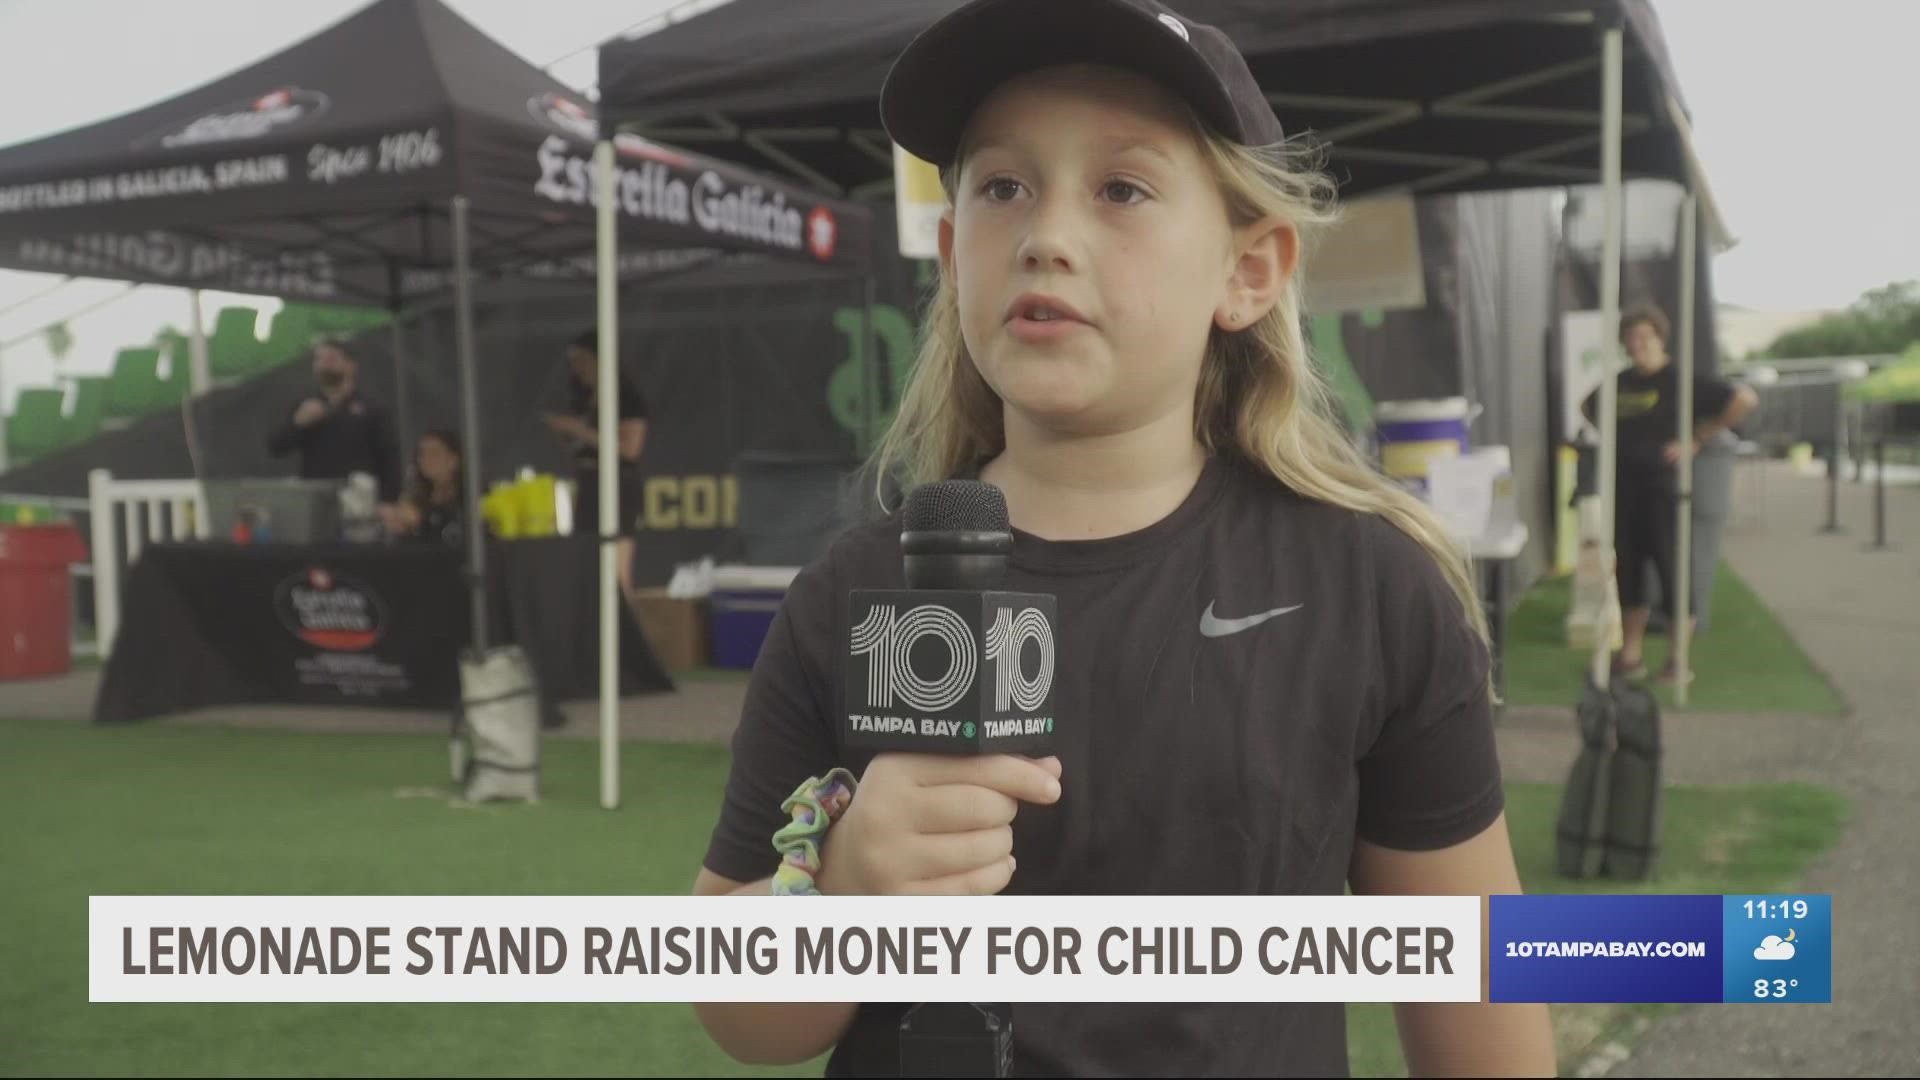 Now, Caroline runs the C&C Lemonade Factory to raise money for the fight against childhood cancer.